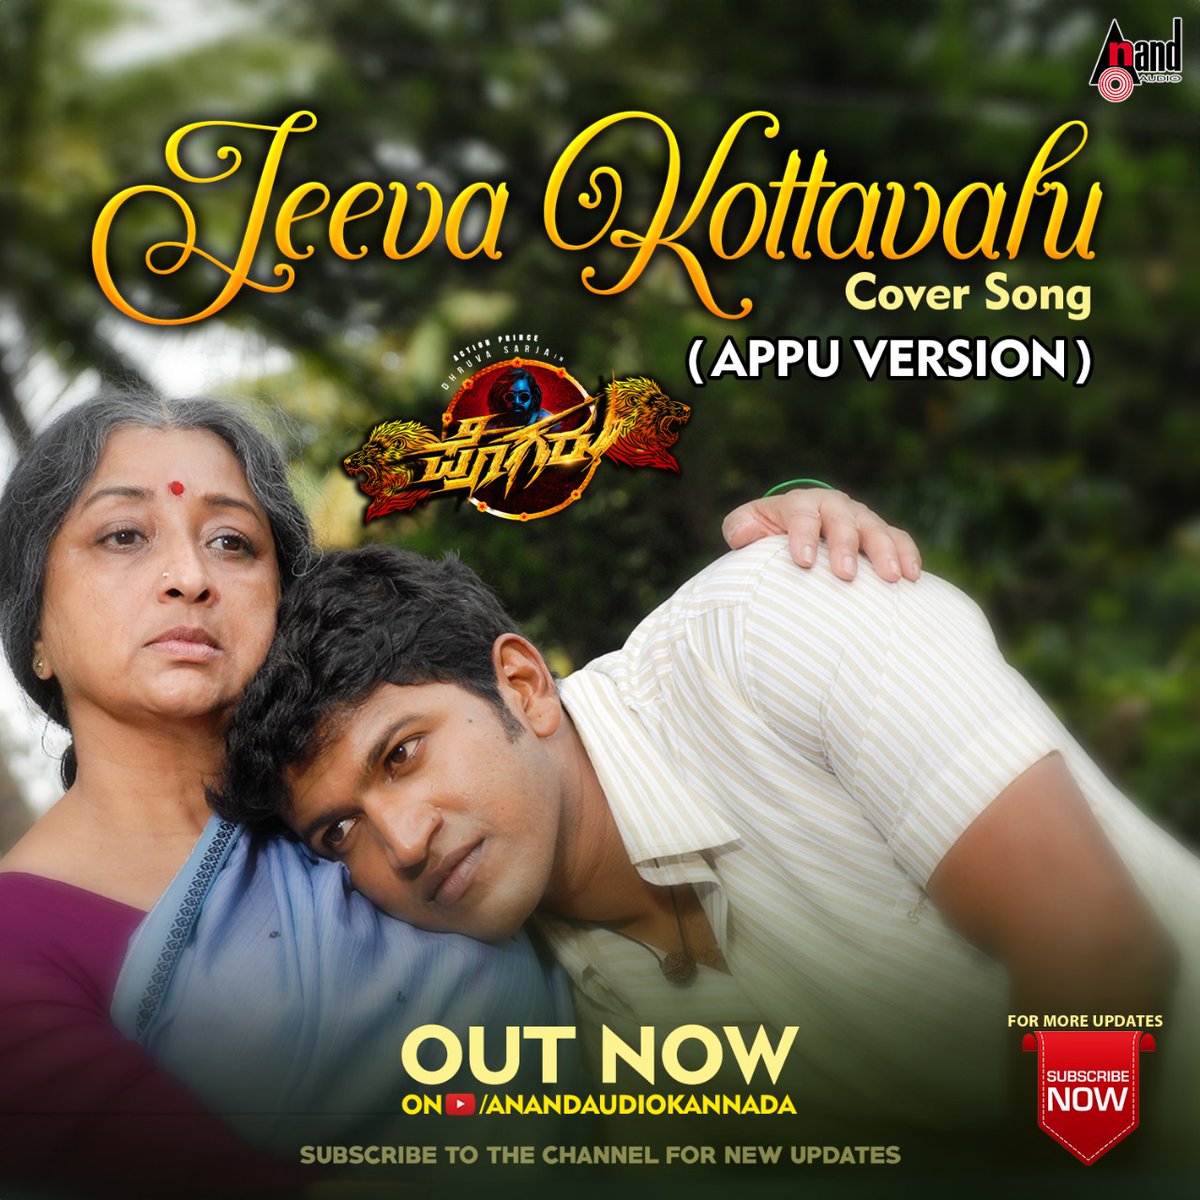 Jeeva Kottavalu cover version of Appu

Click to watch now: youtu.be/NUJErBMC9fk

#AnandAudio #Appu #puneethrajkumar #powerstar #coverversion